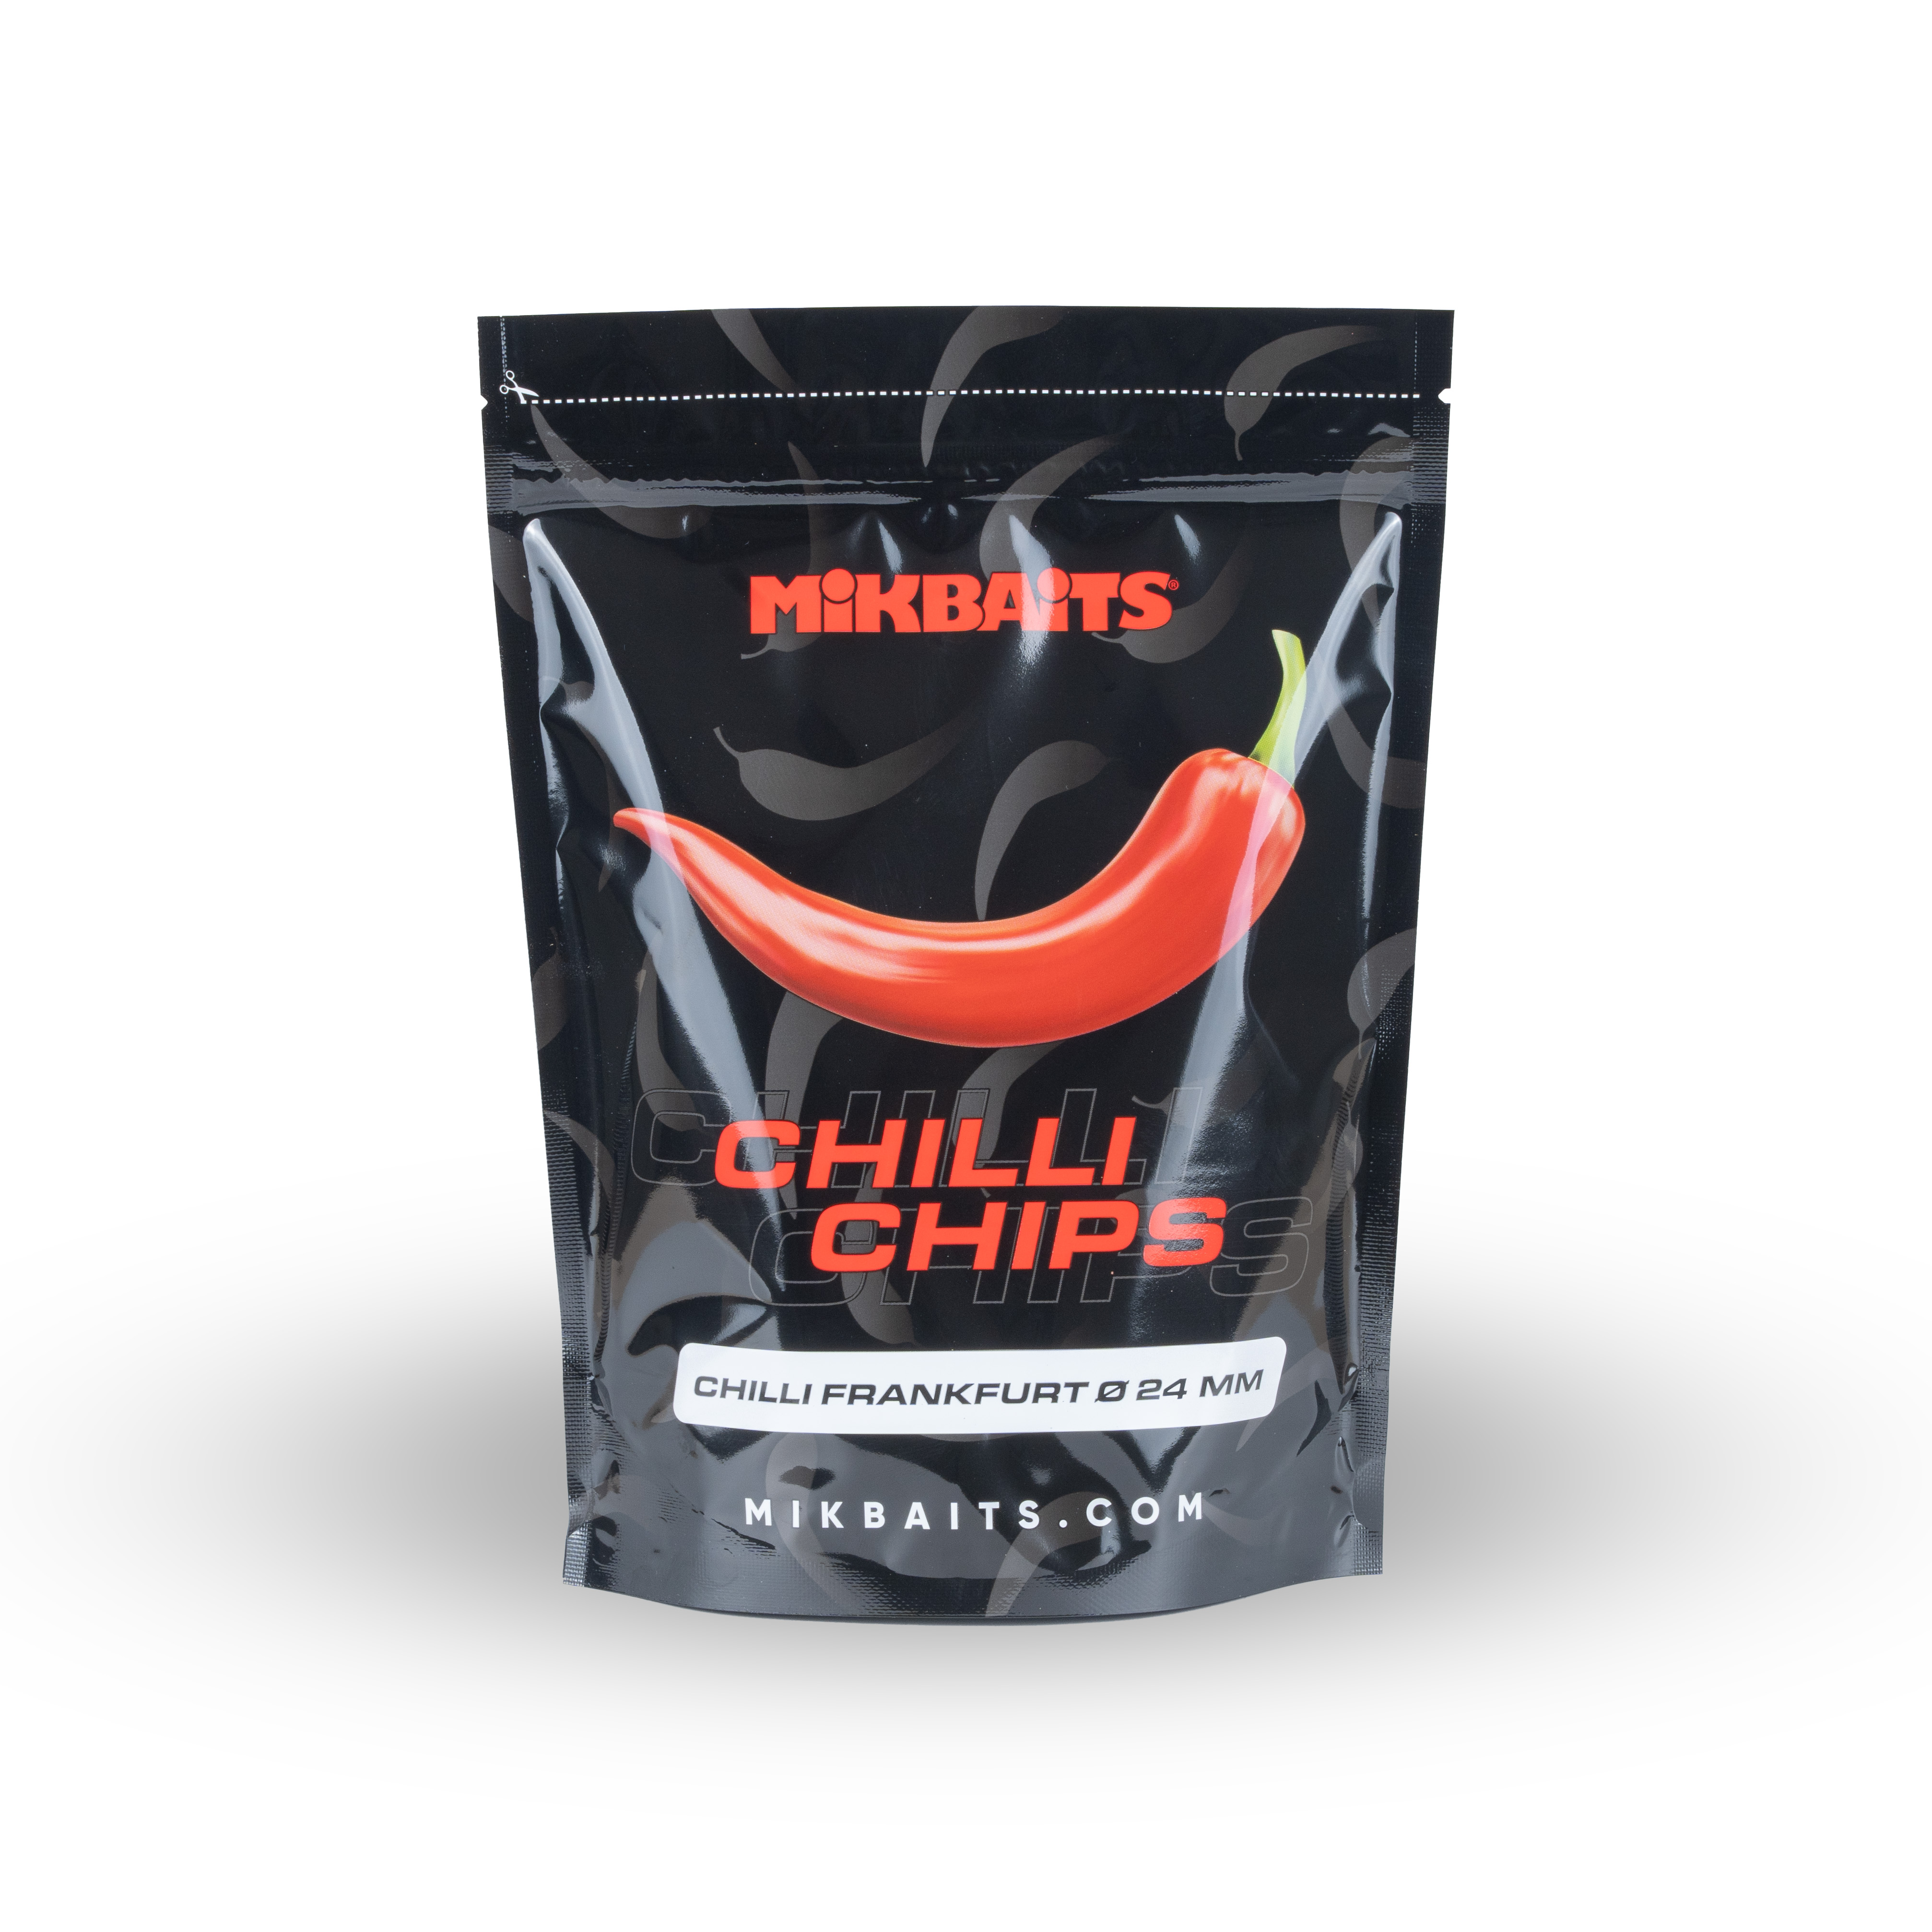 Chilli Chips boilie 300g - Chilli Frankfurt 24mm